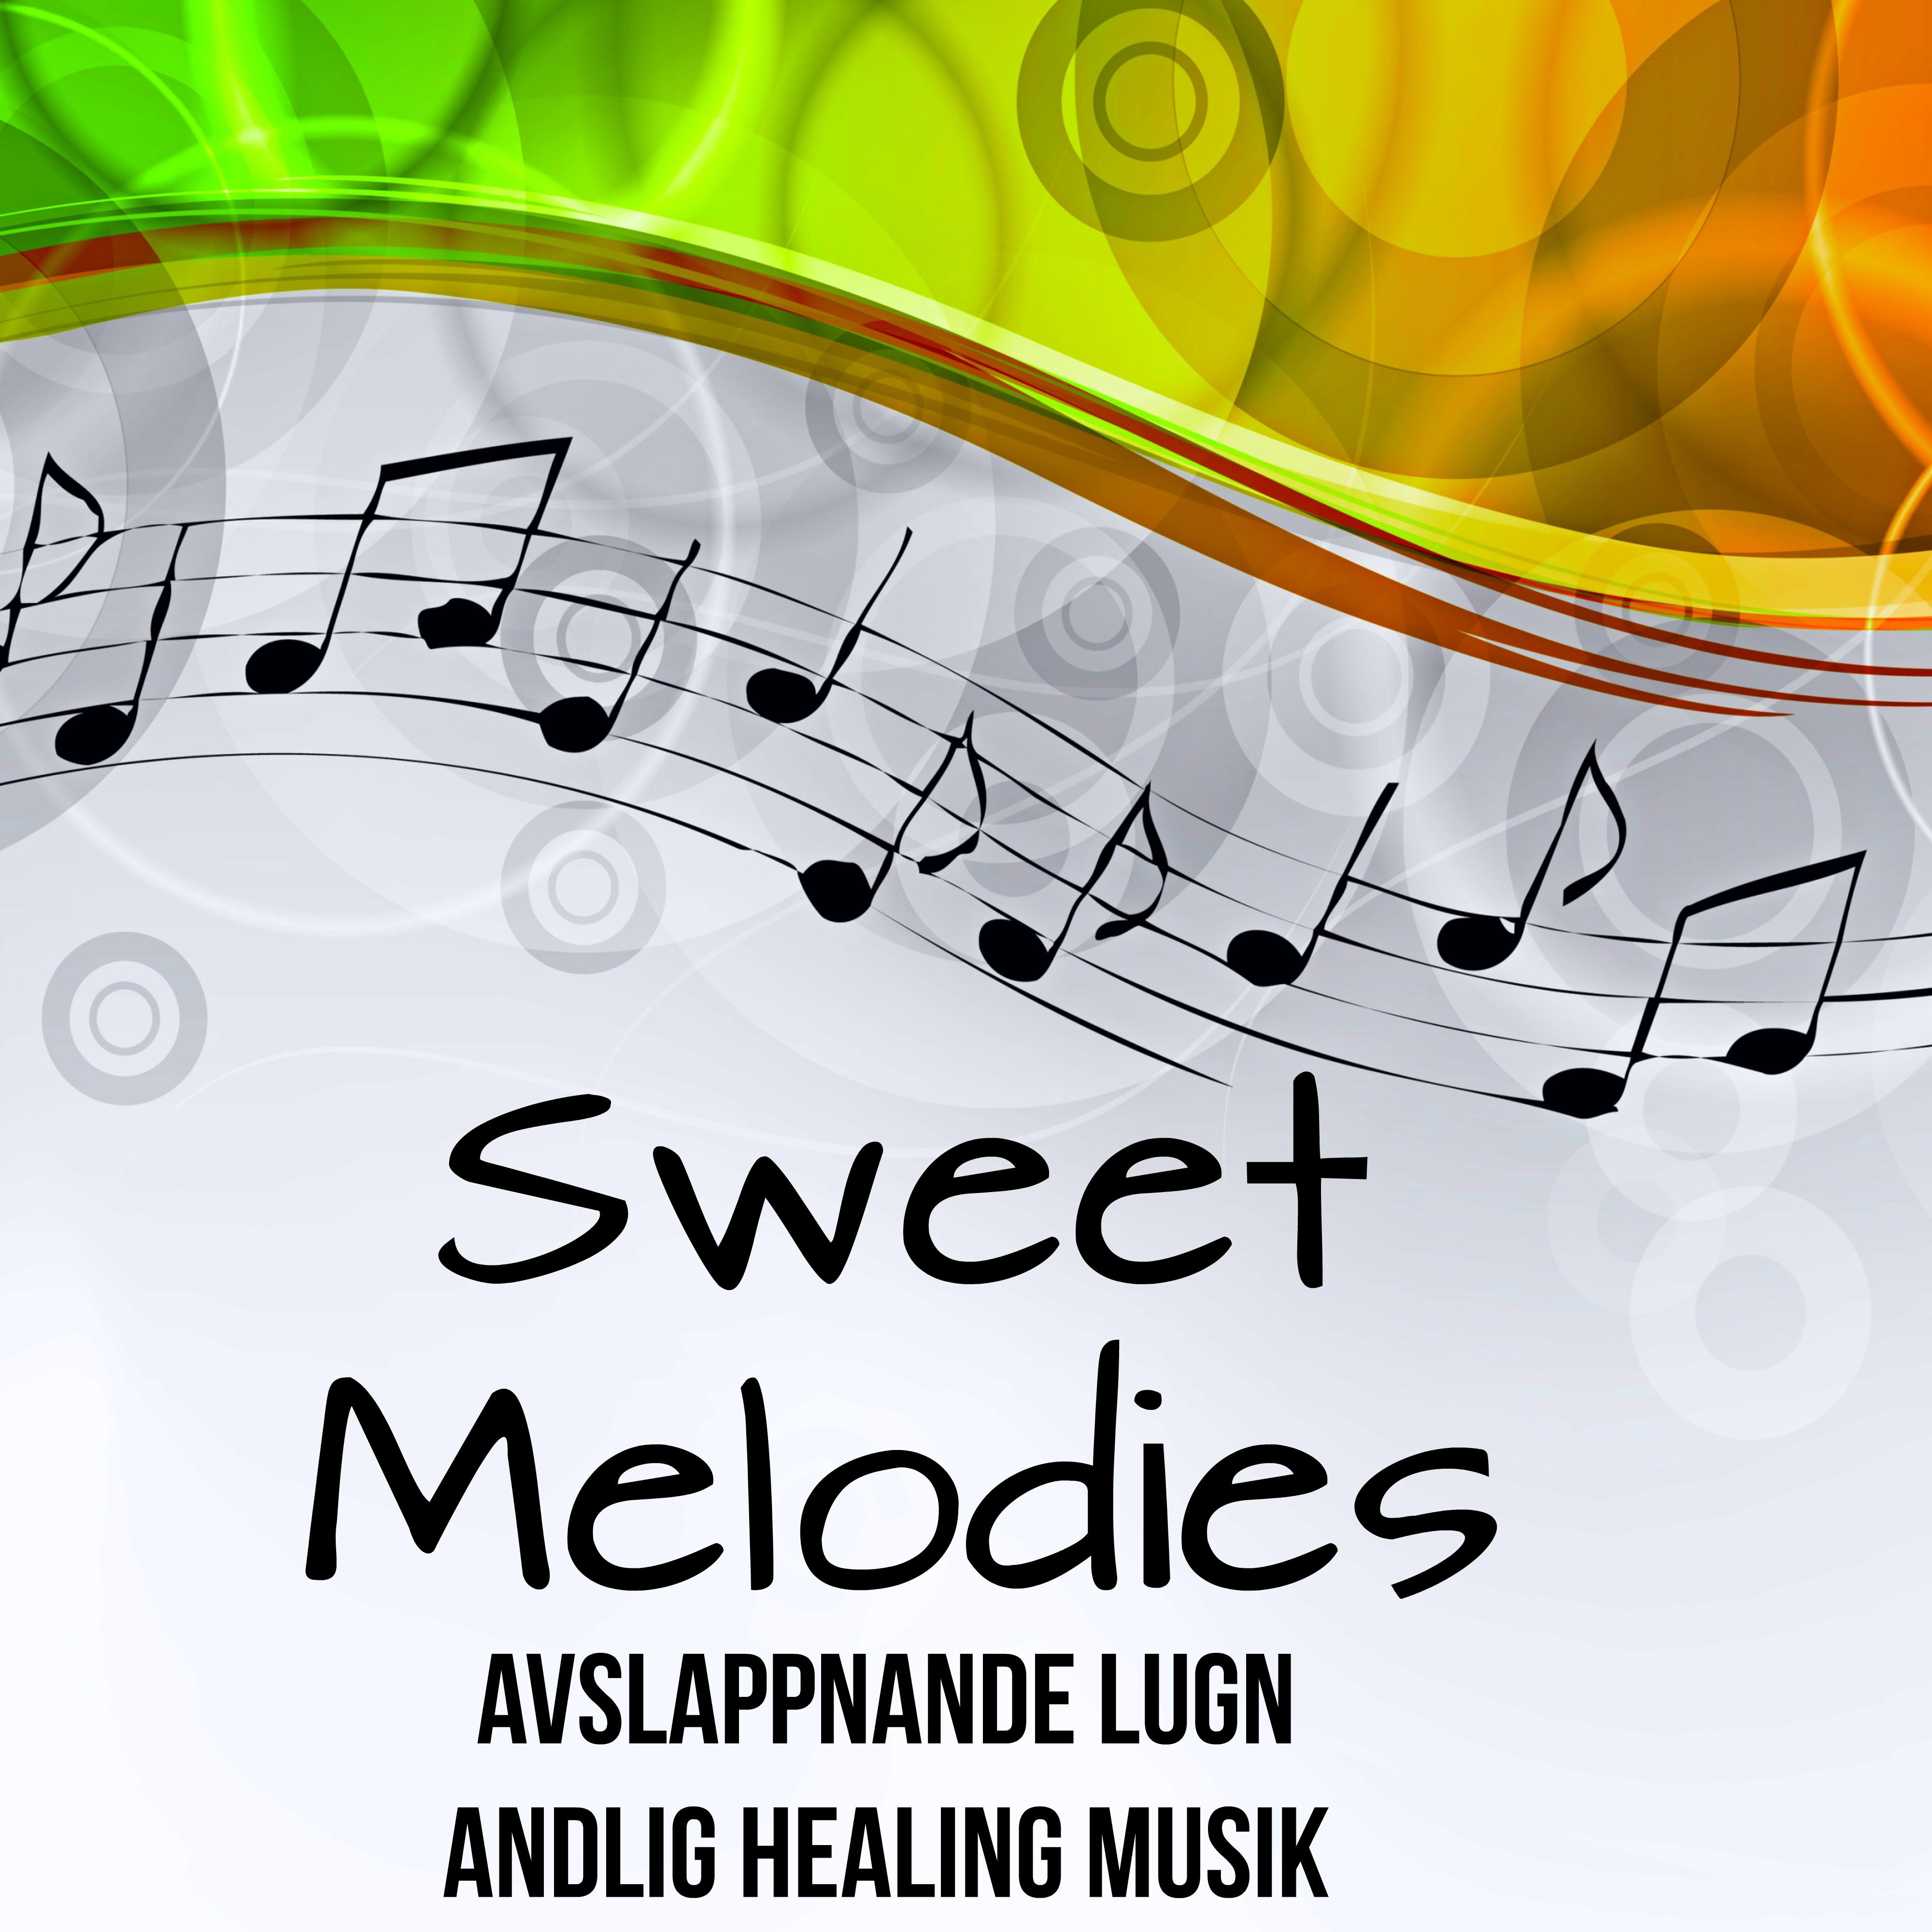 Sweet Melodies - Avslappnande Lugn Andlig Healing Musik med Easy Listening Chillout Instrumental Ljud